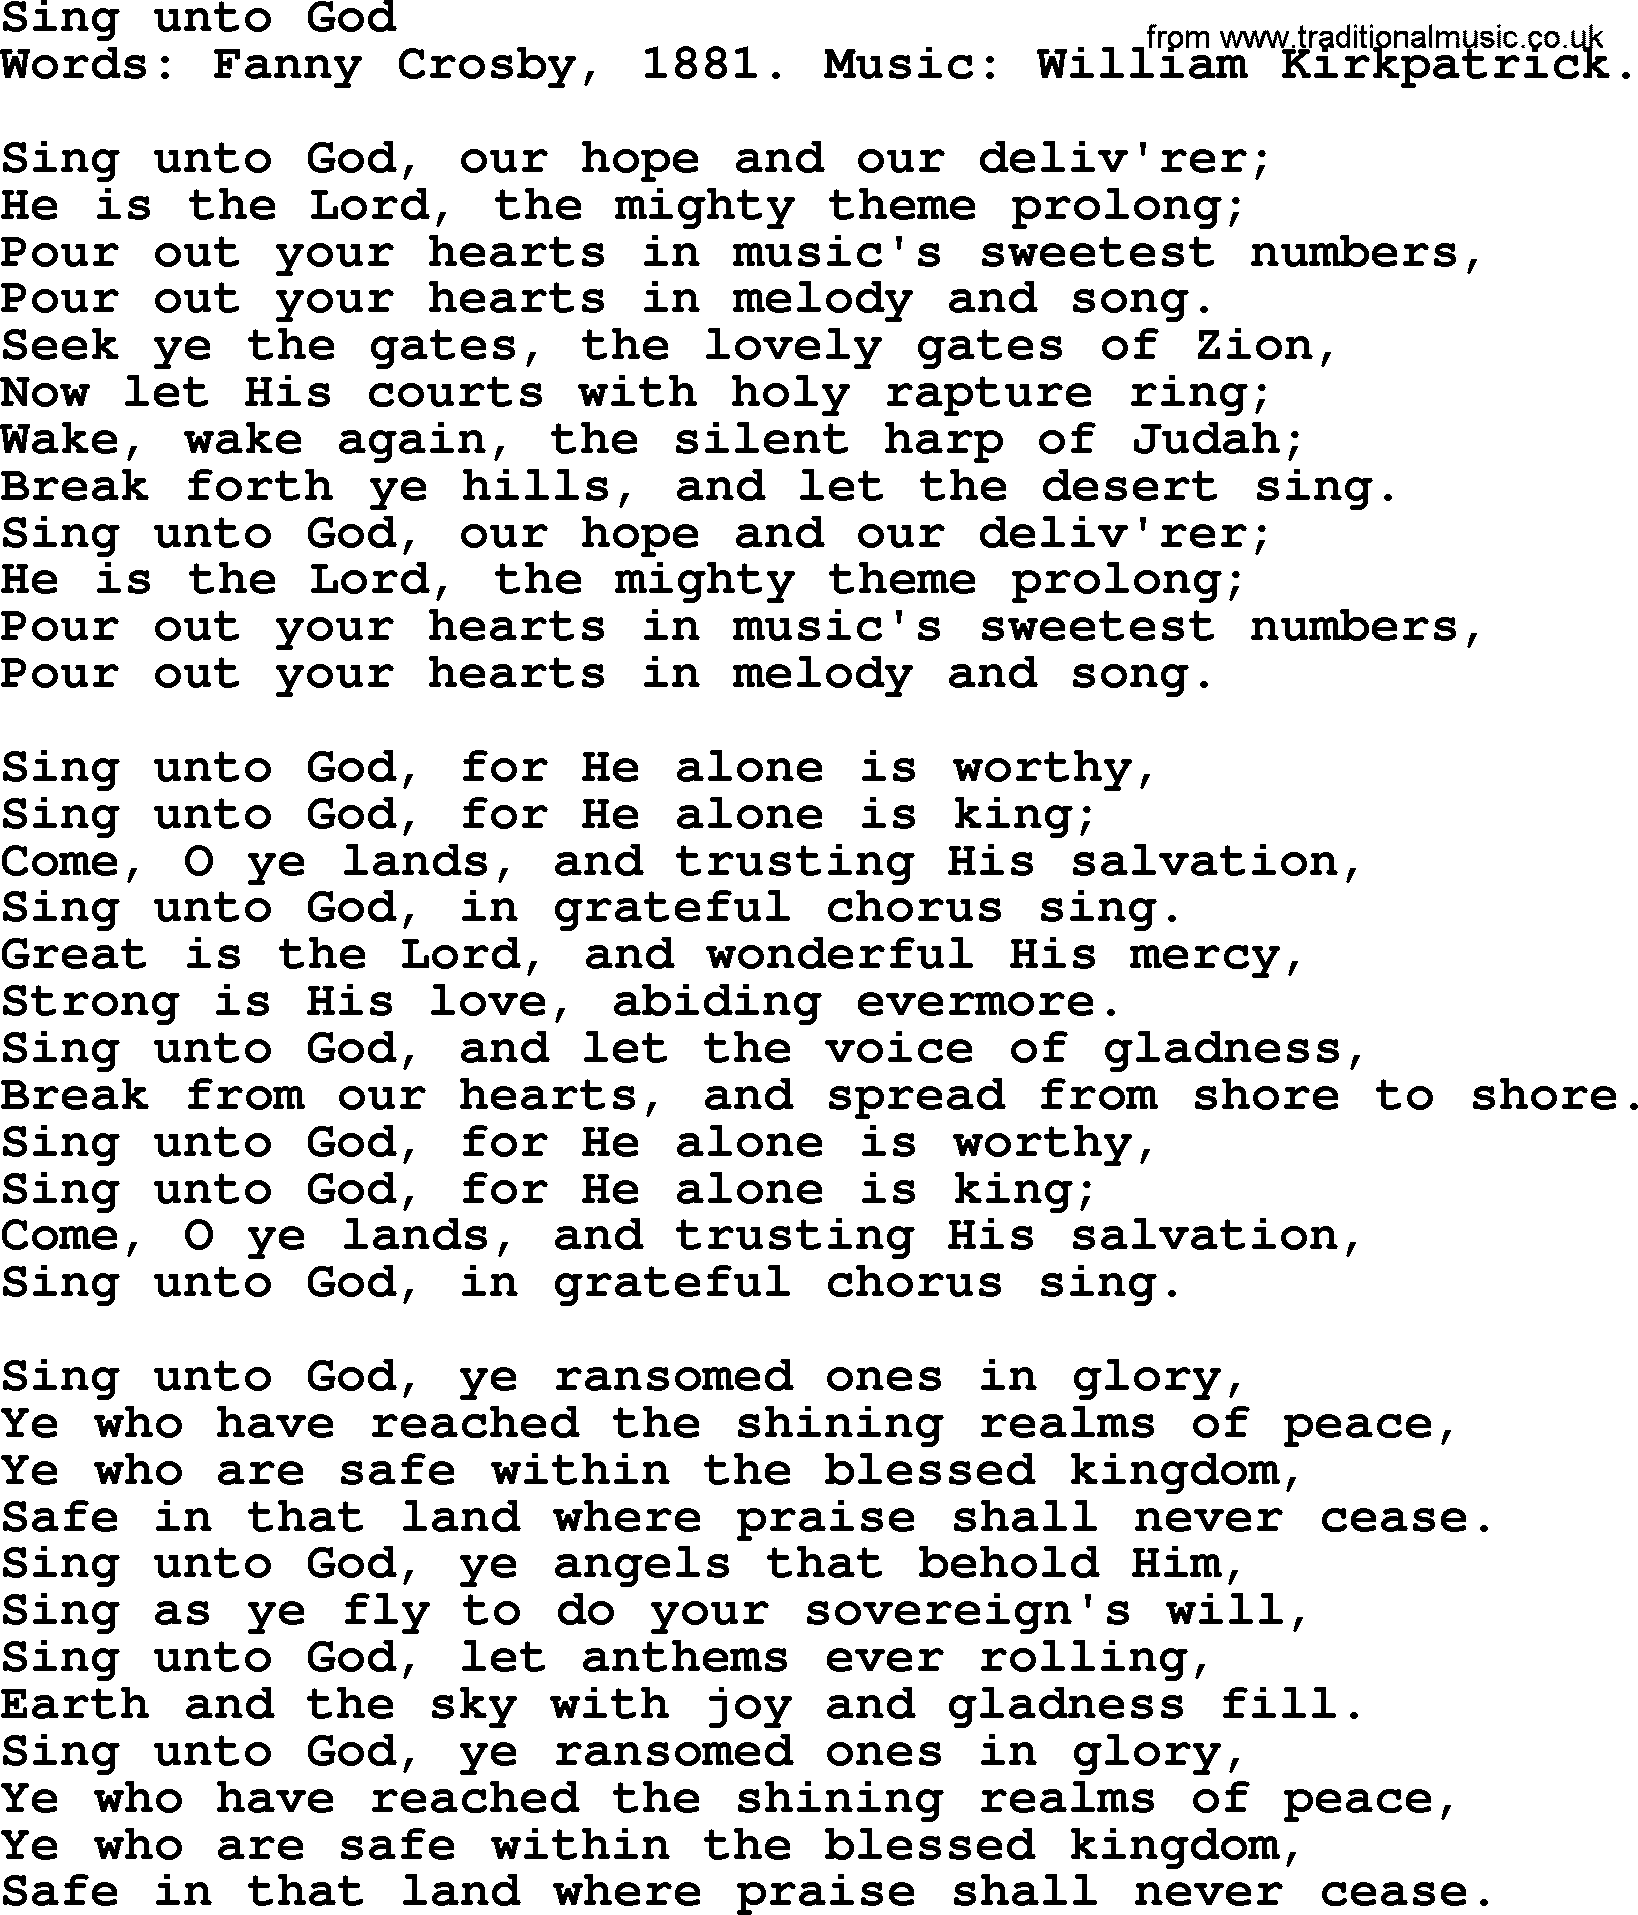 Fanny Crosby song: Sing Unto God, lyrics